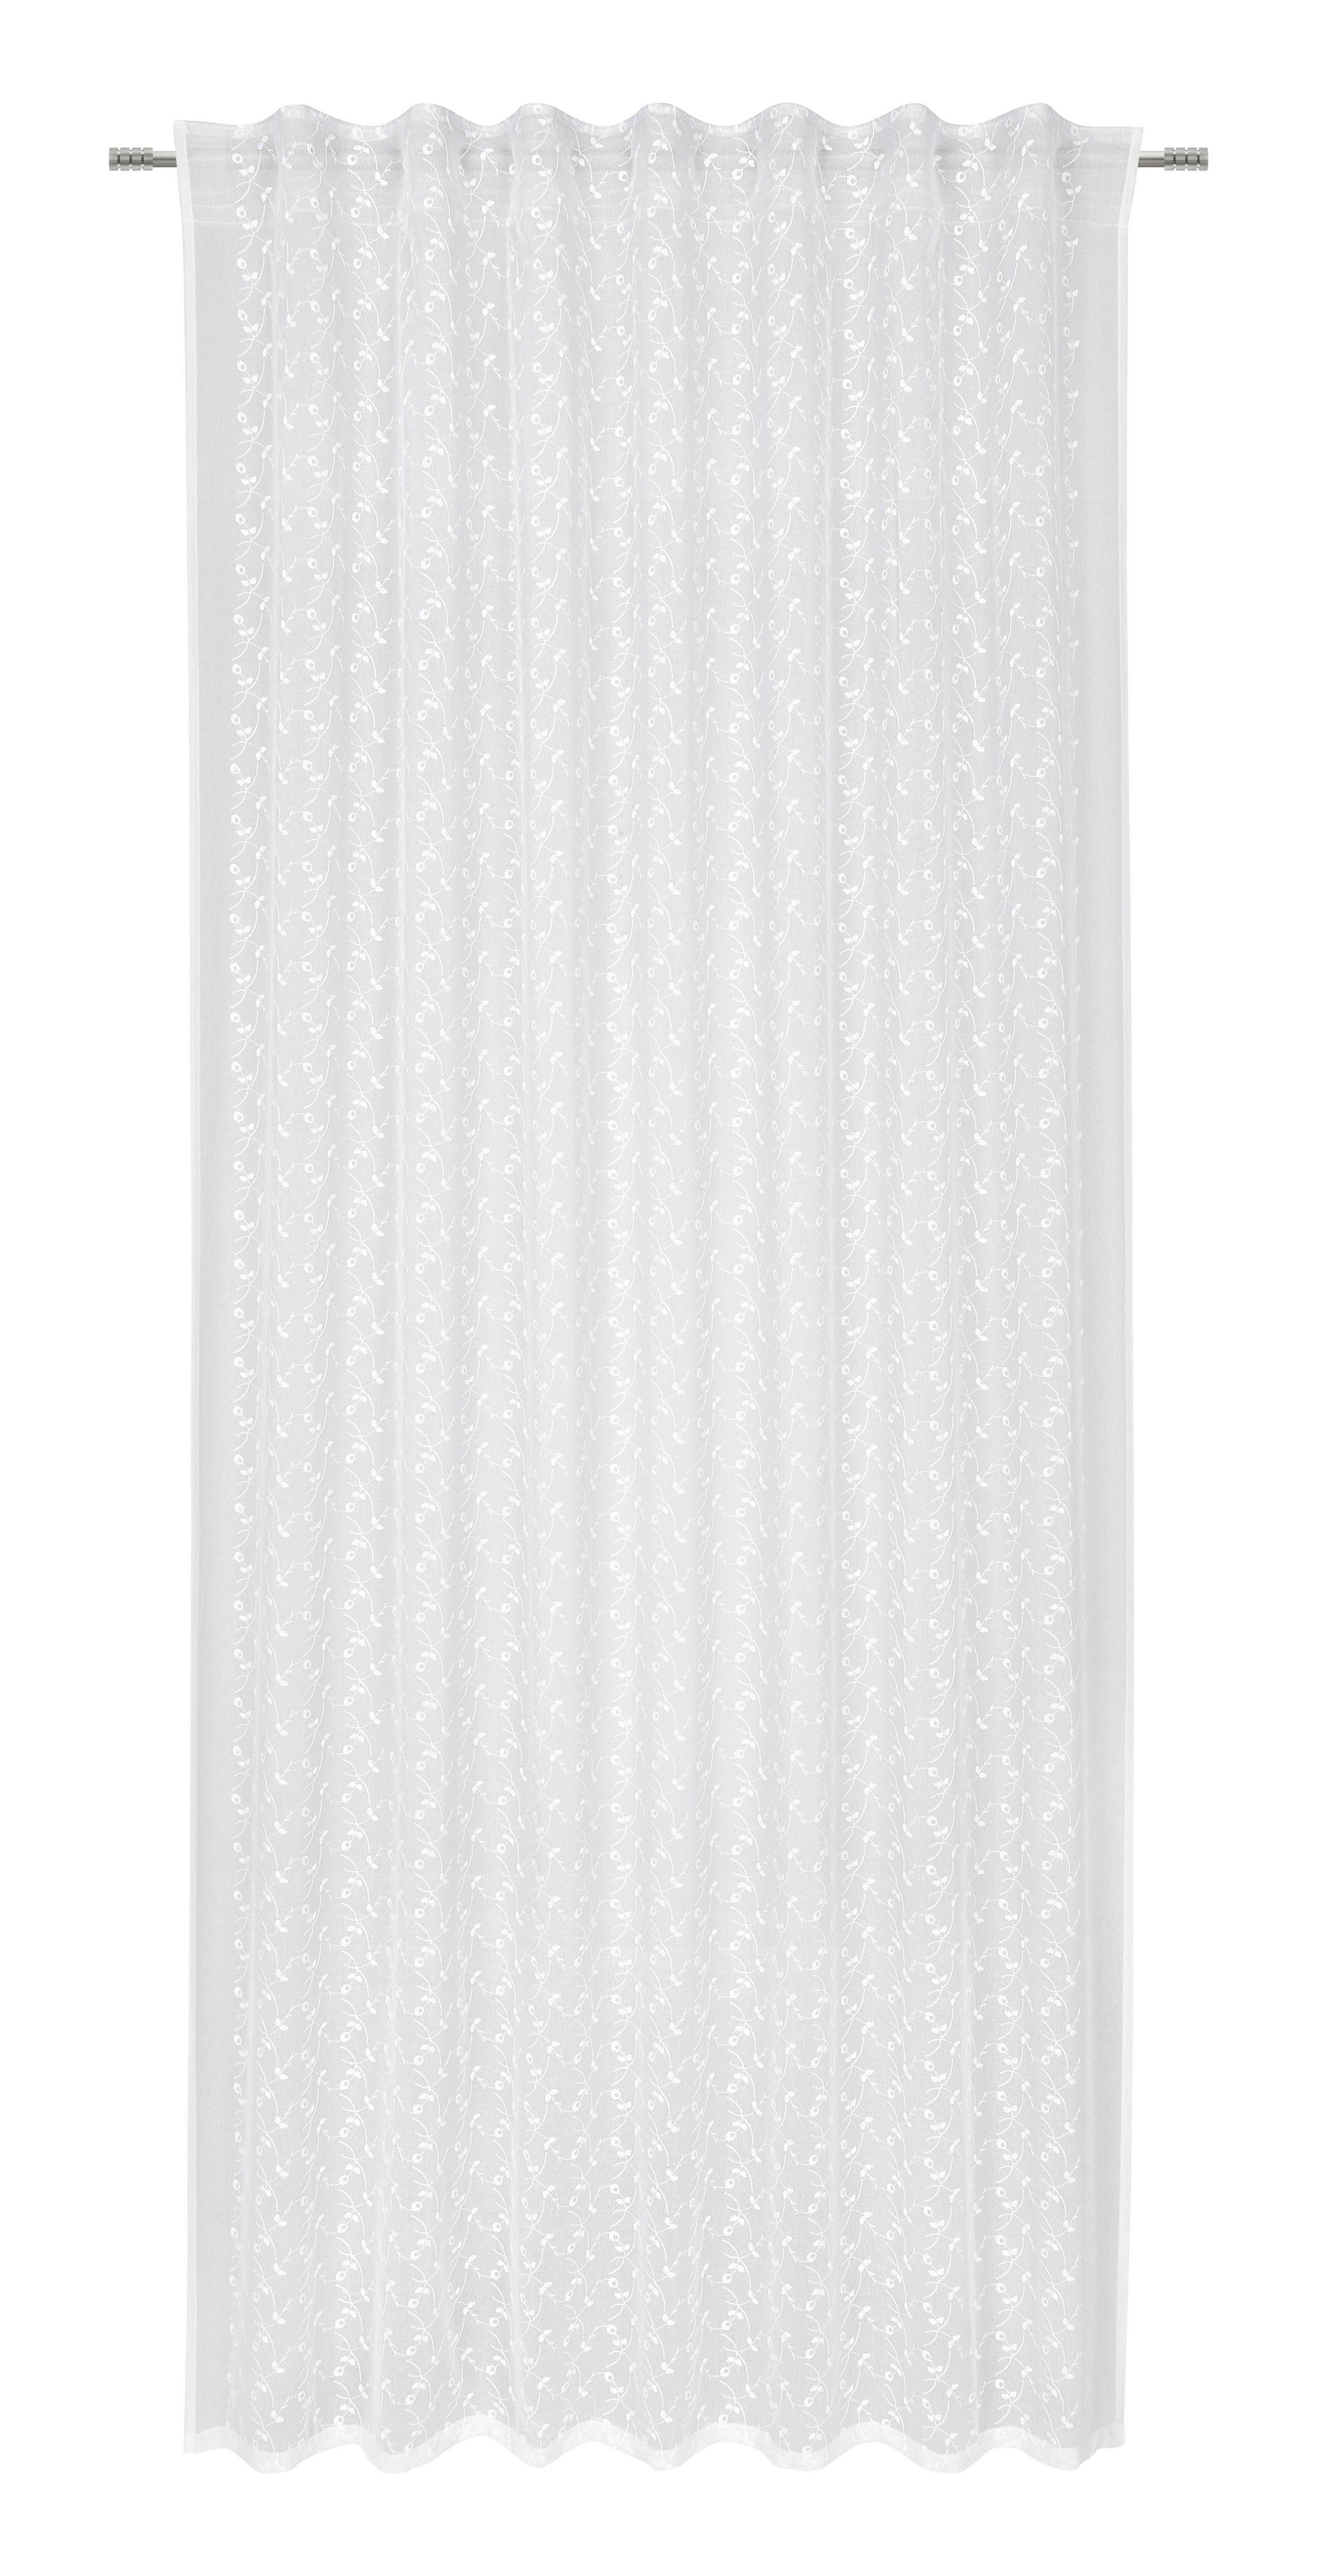 Készfüggöny Desiree - Fehér, romantikus/Landhaus, Textil (140/245cm) - James Wood